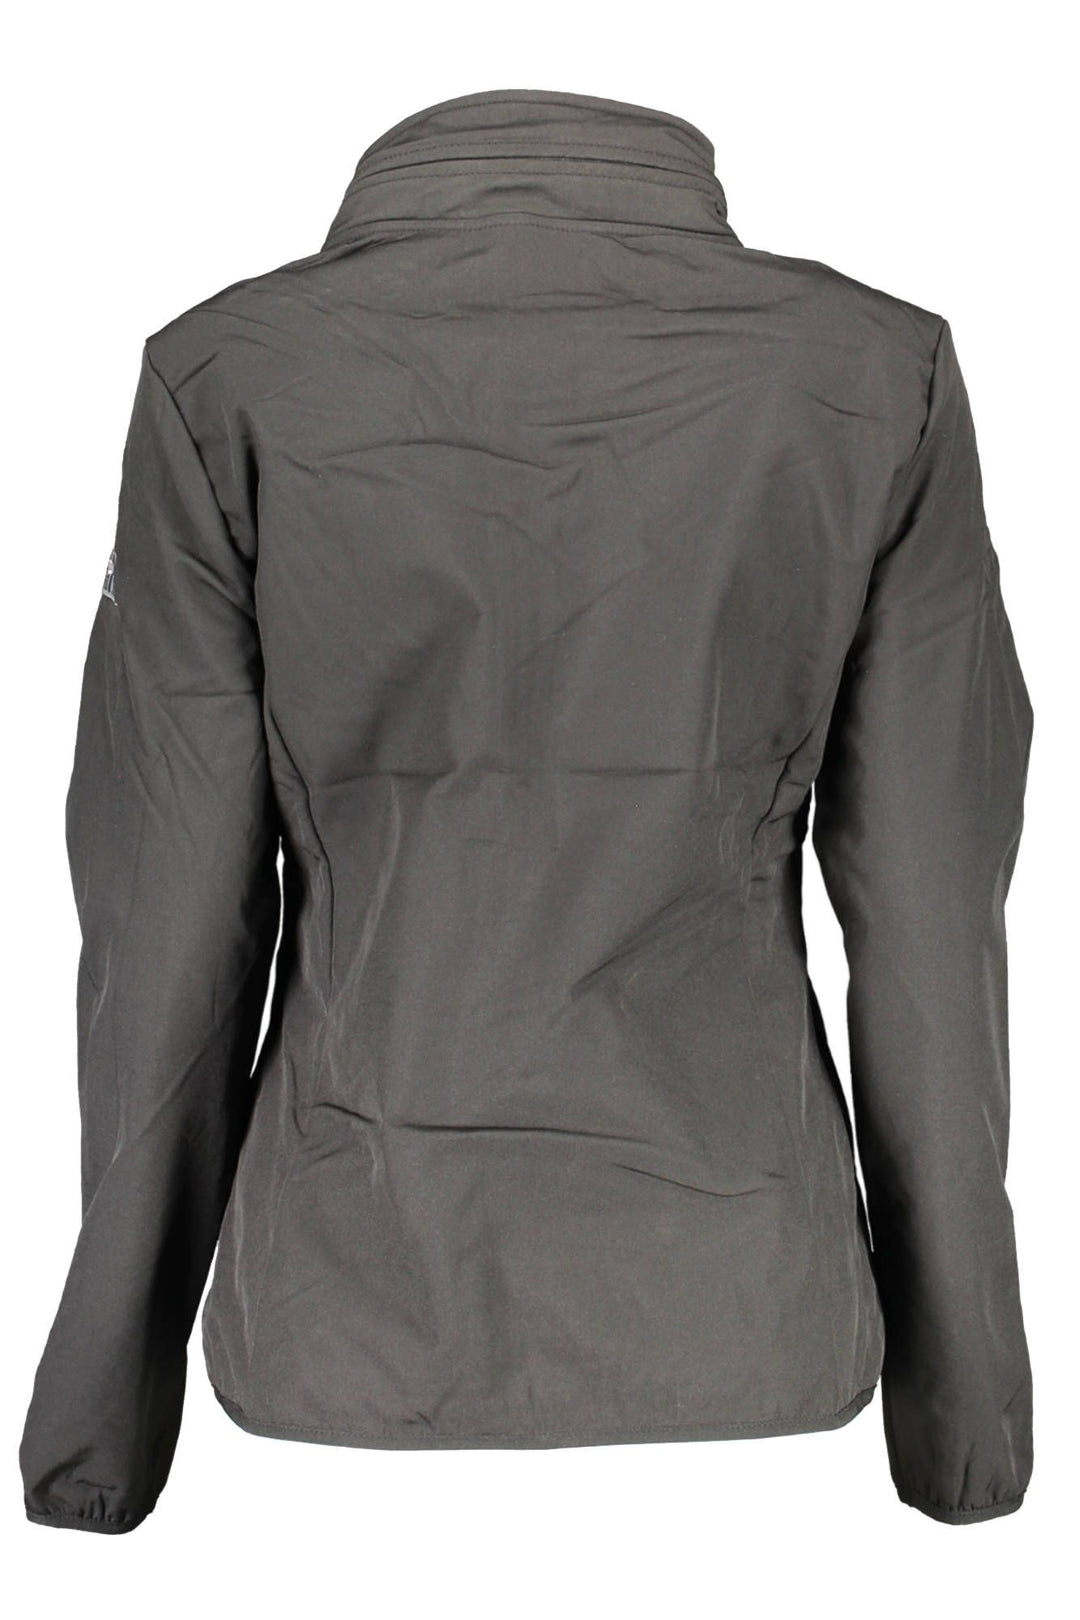 Norway 1963 Sleek Black Sports Jacket with Removable Hood